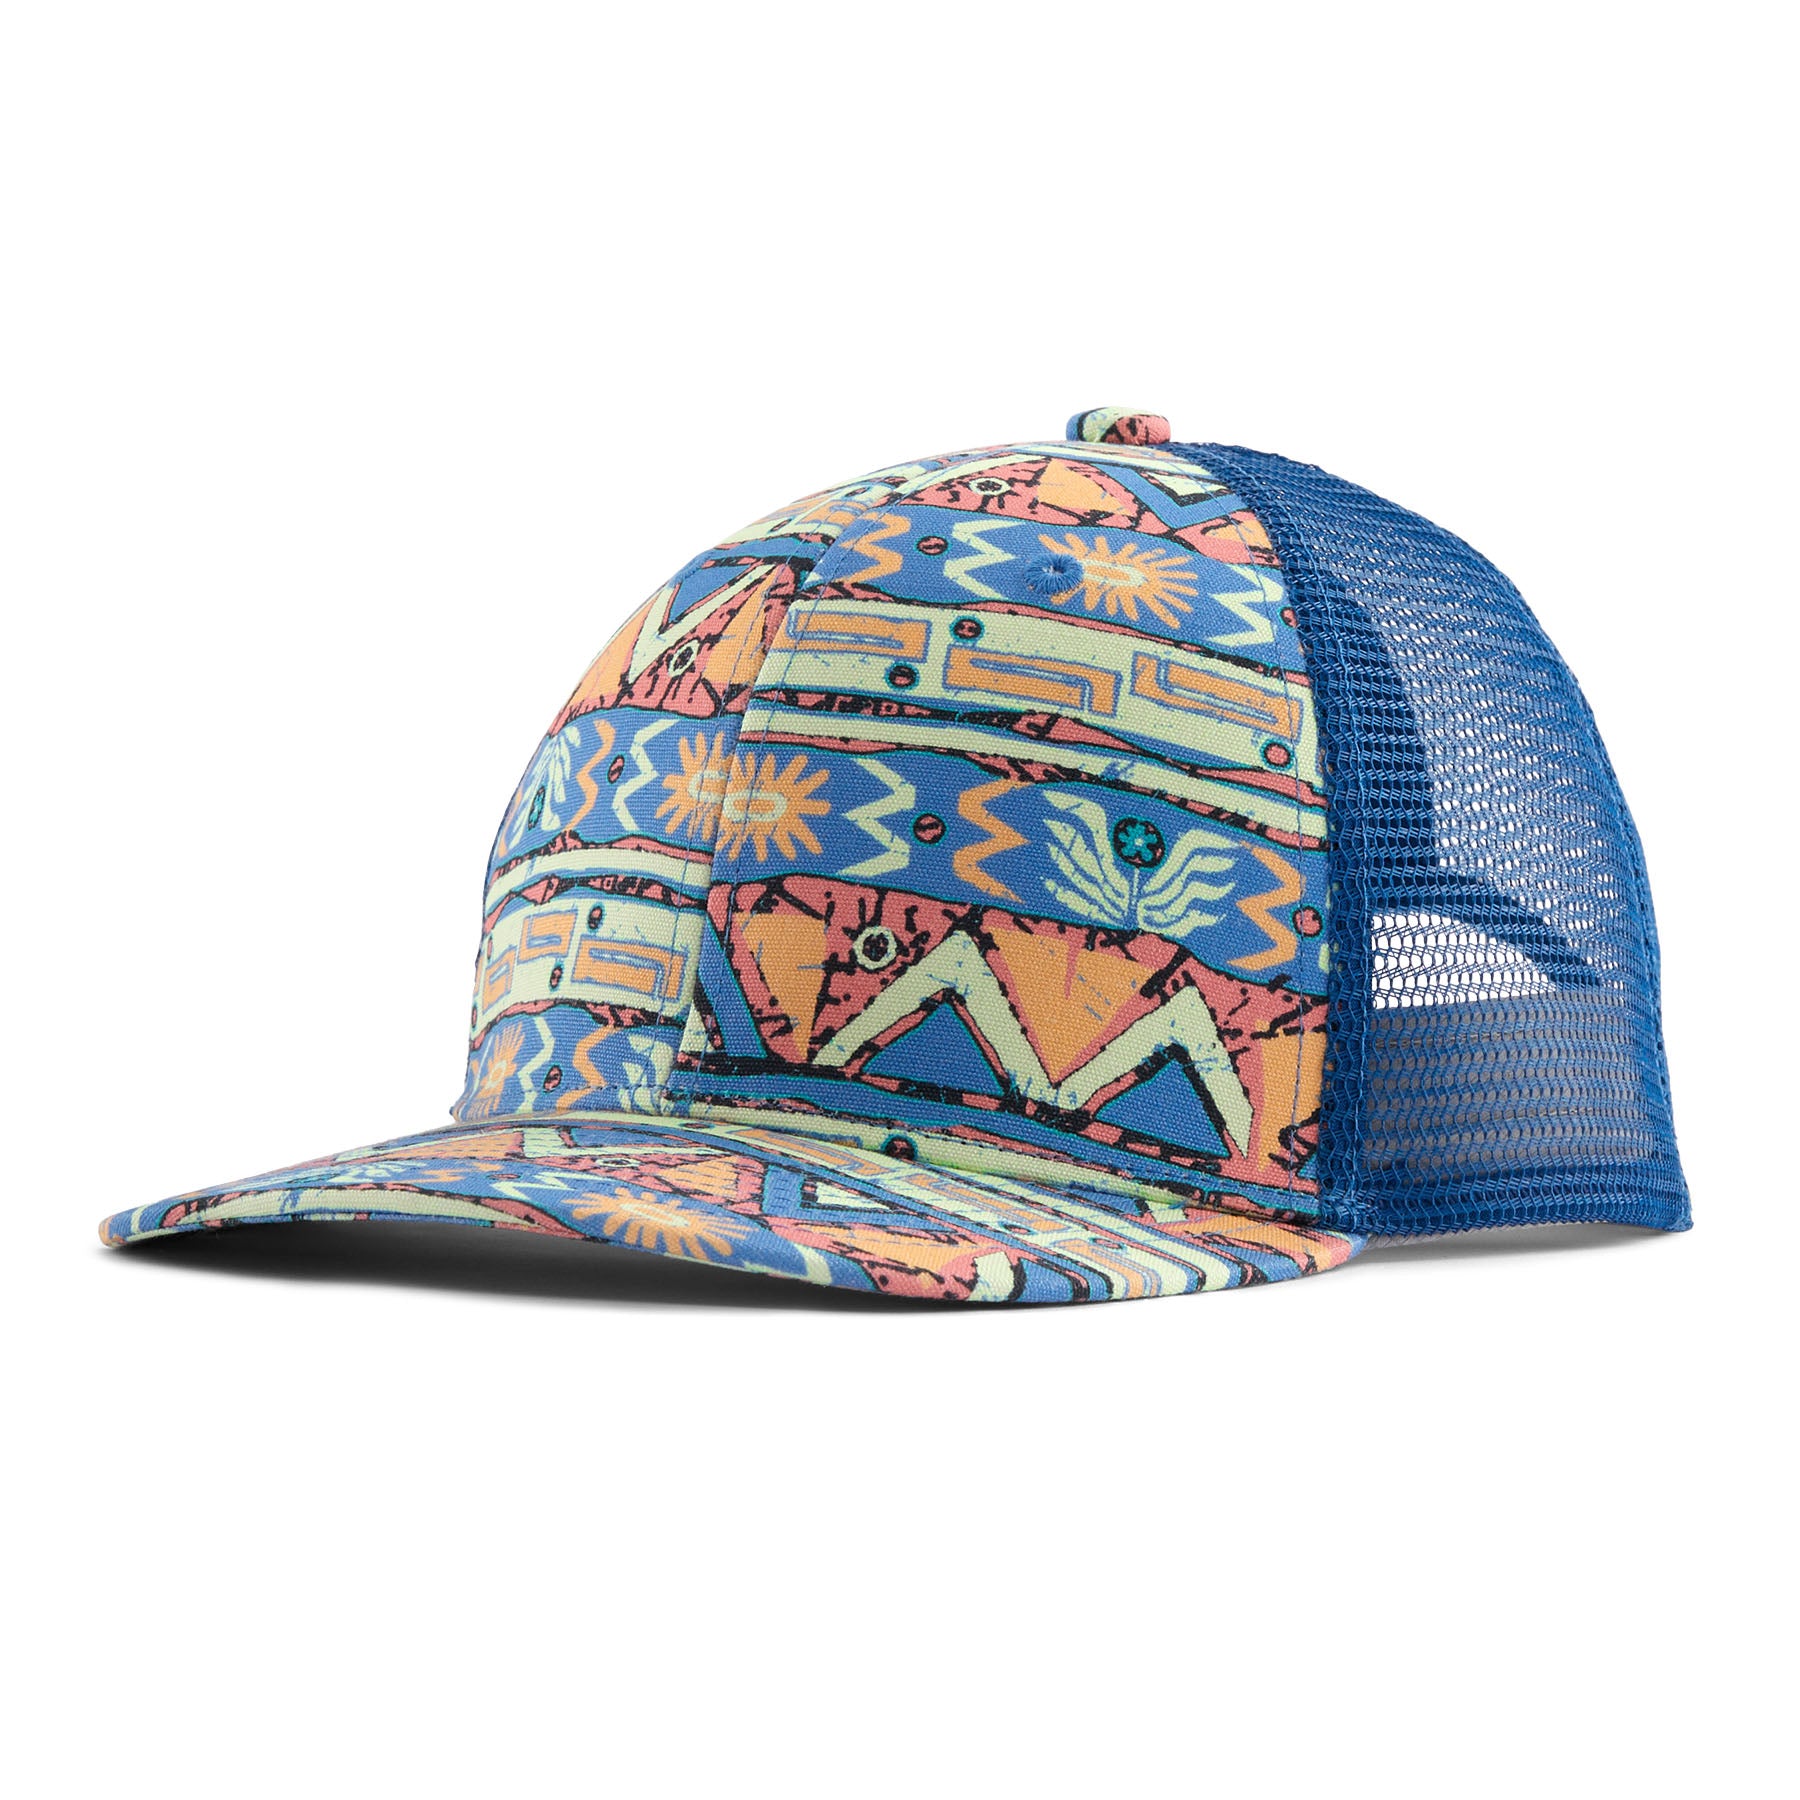 Costa Del Mar brand Fishing Hat - Adjustable Mesh backing